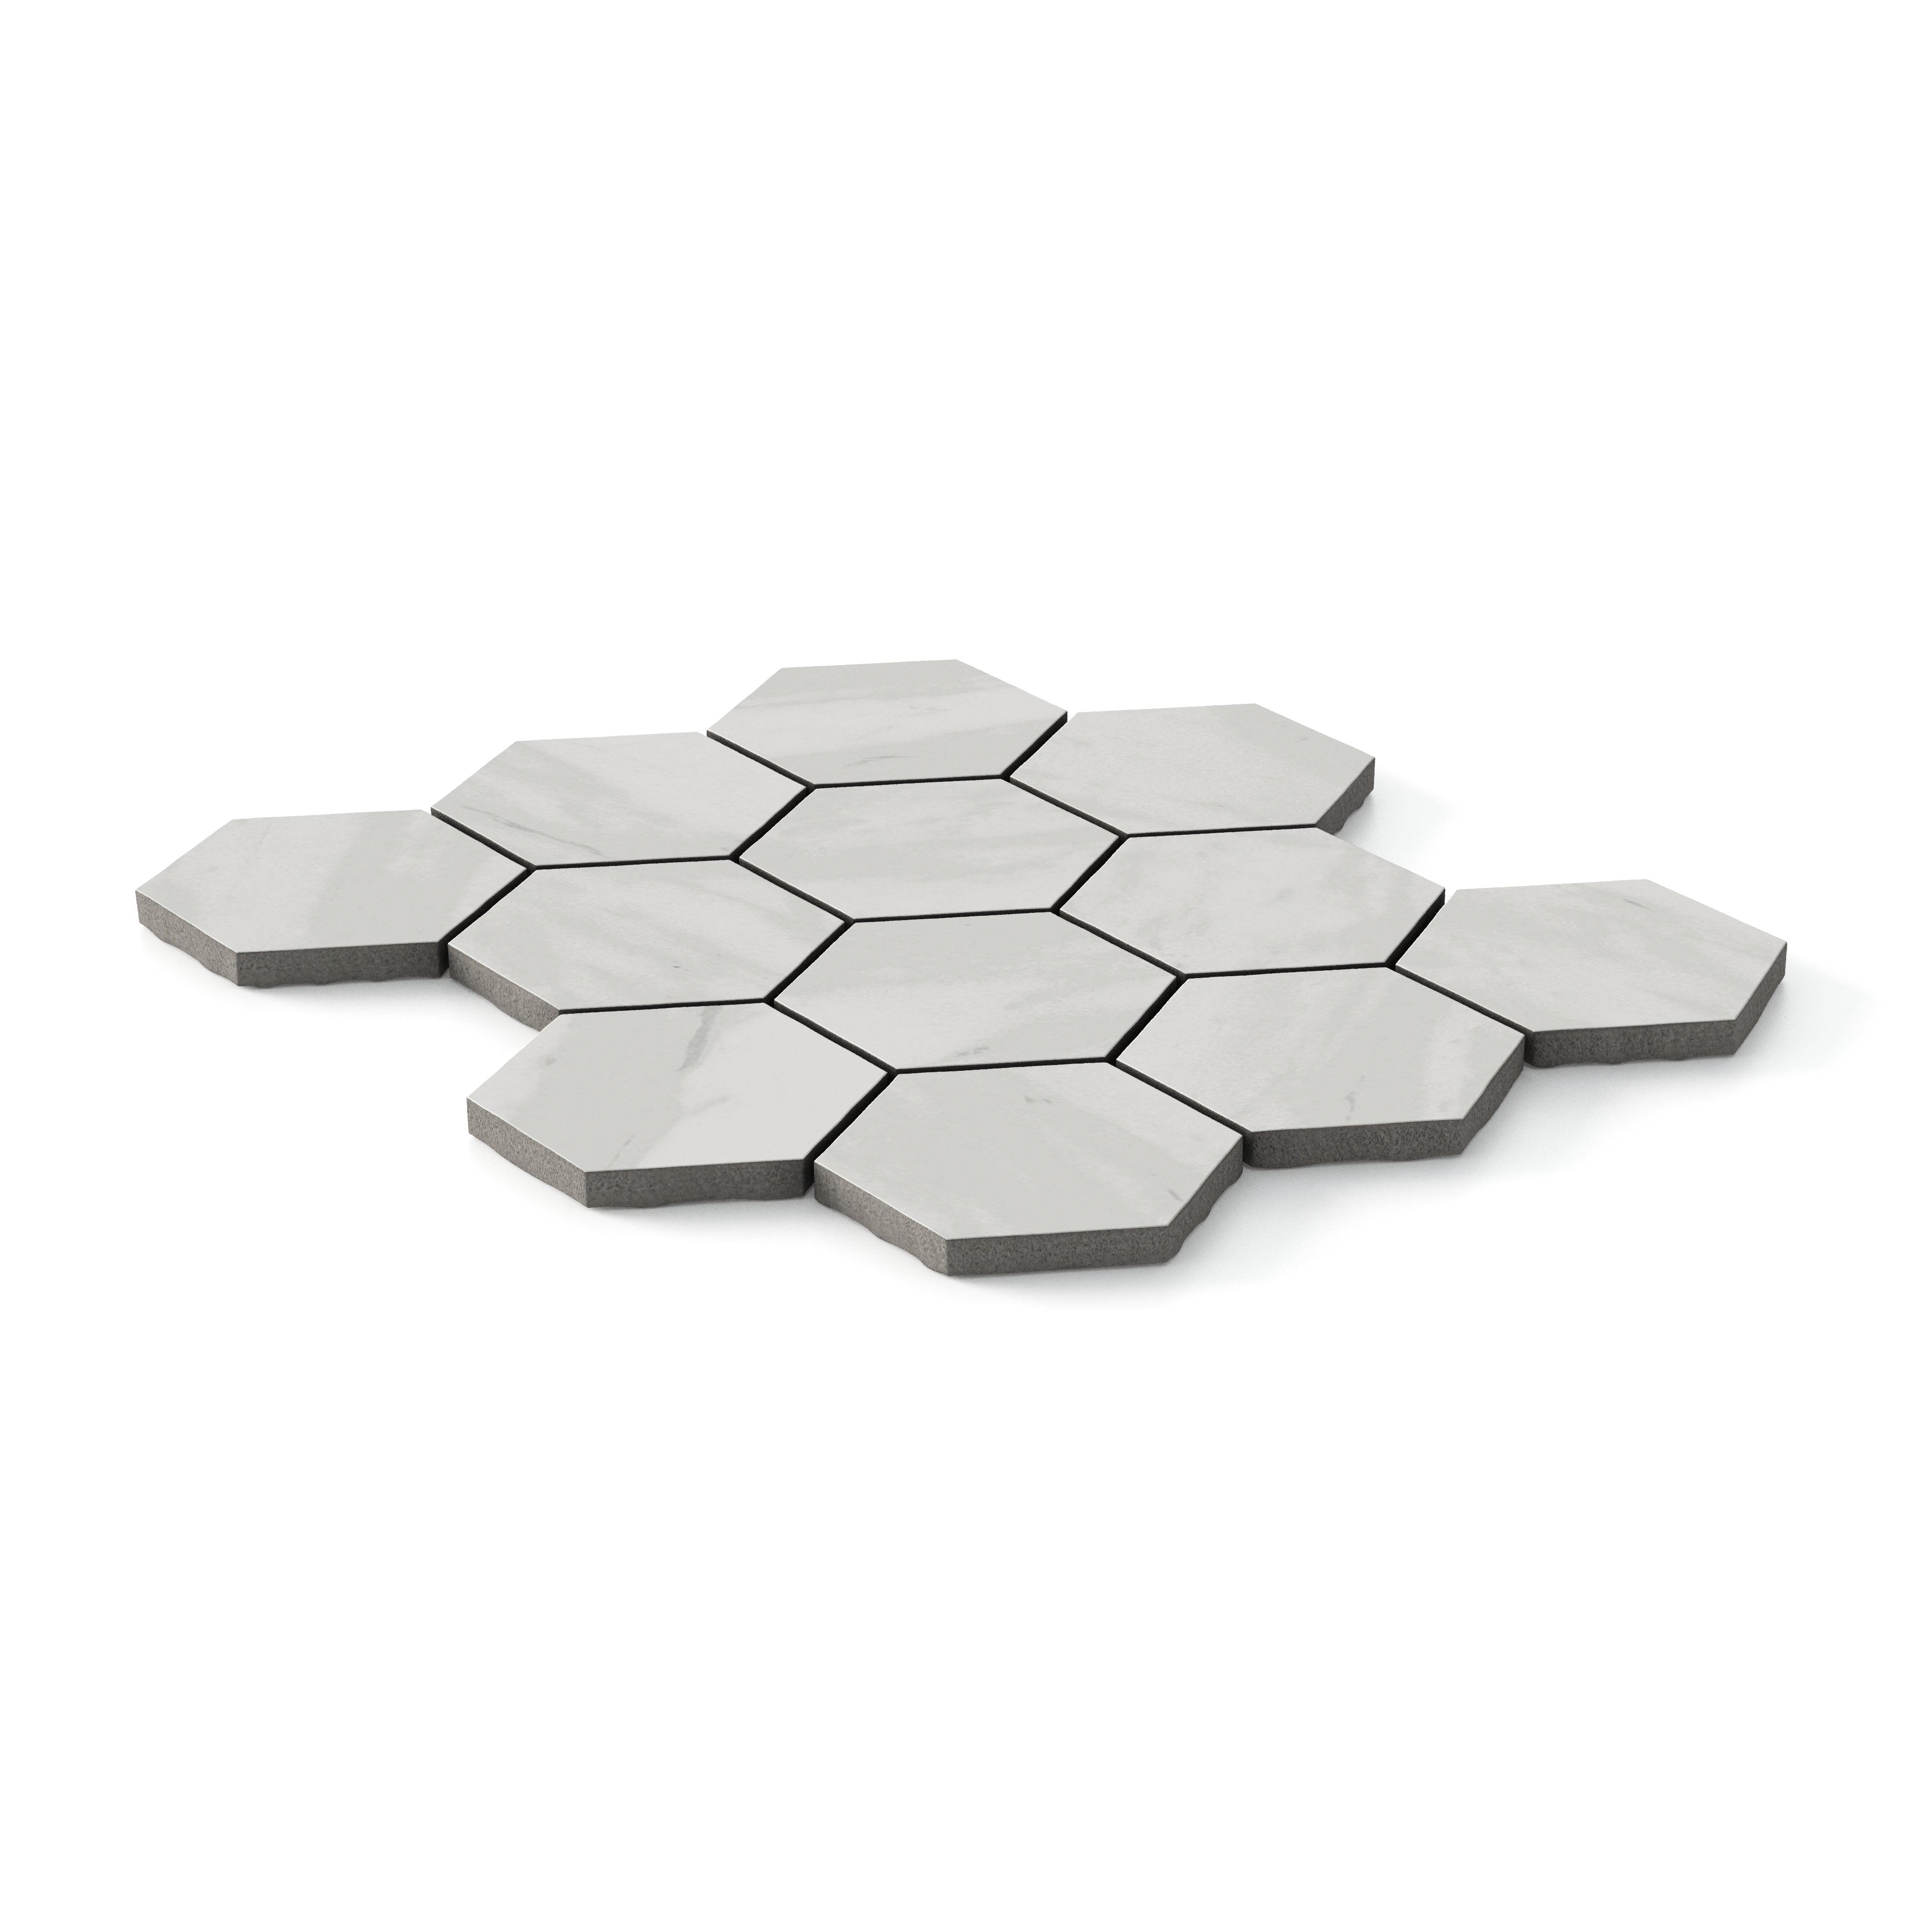 Blair 3x3 Matte Porcelain Hexagon Mosaic Tile in Volakas White